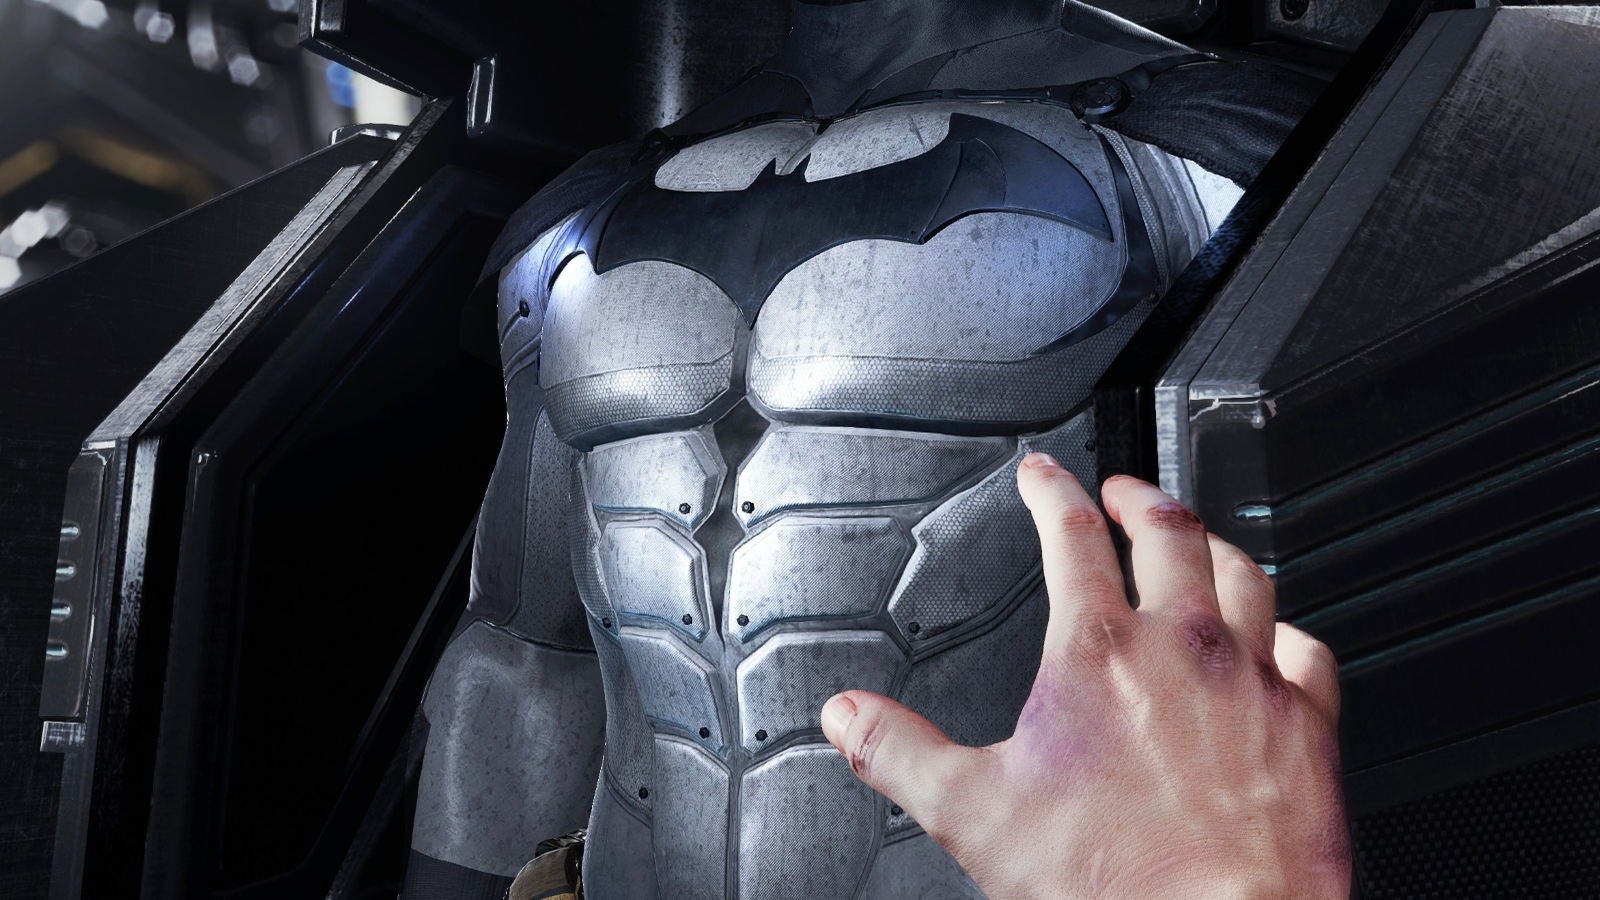 Batman: Arkham VR wallpapers or desktop backgrounds